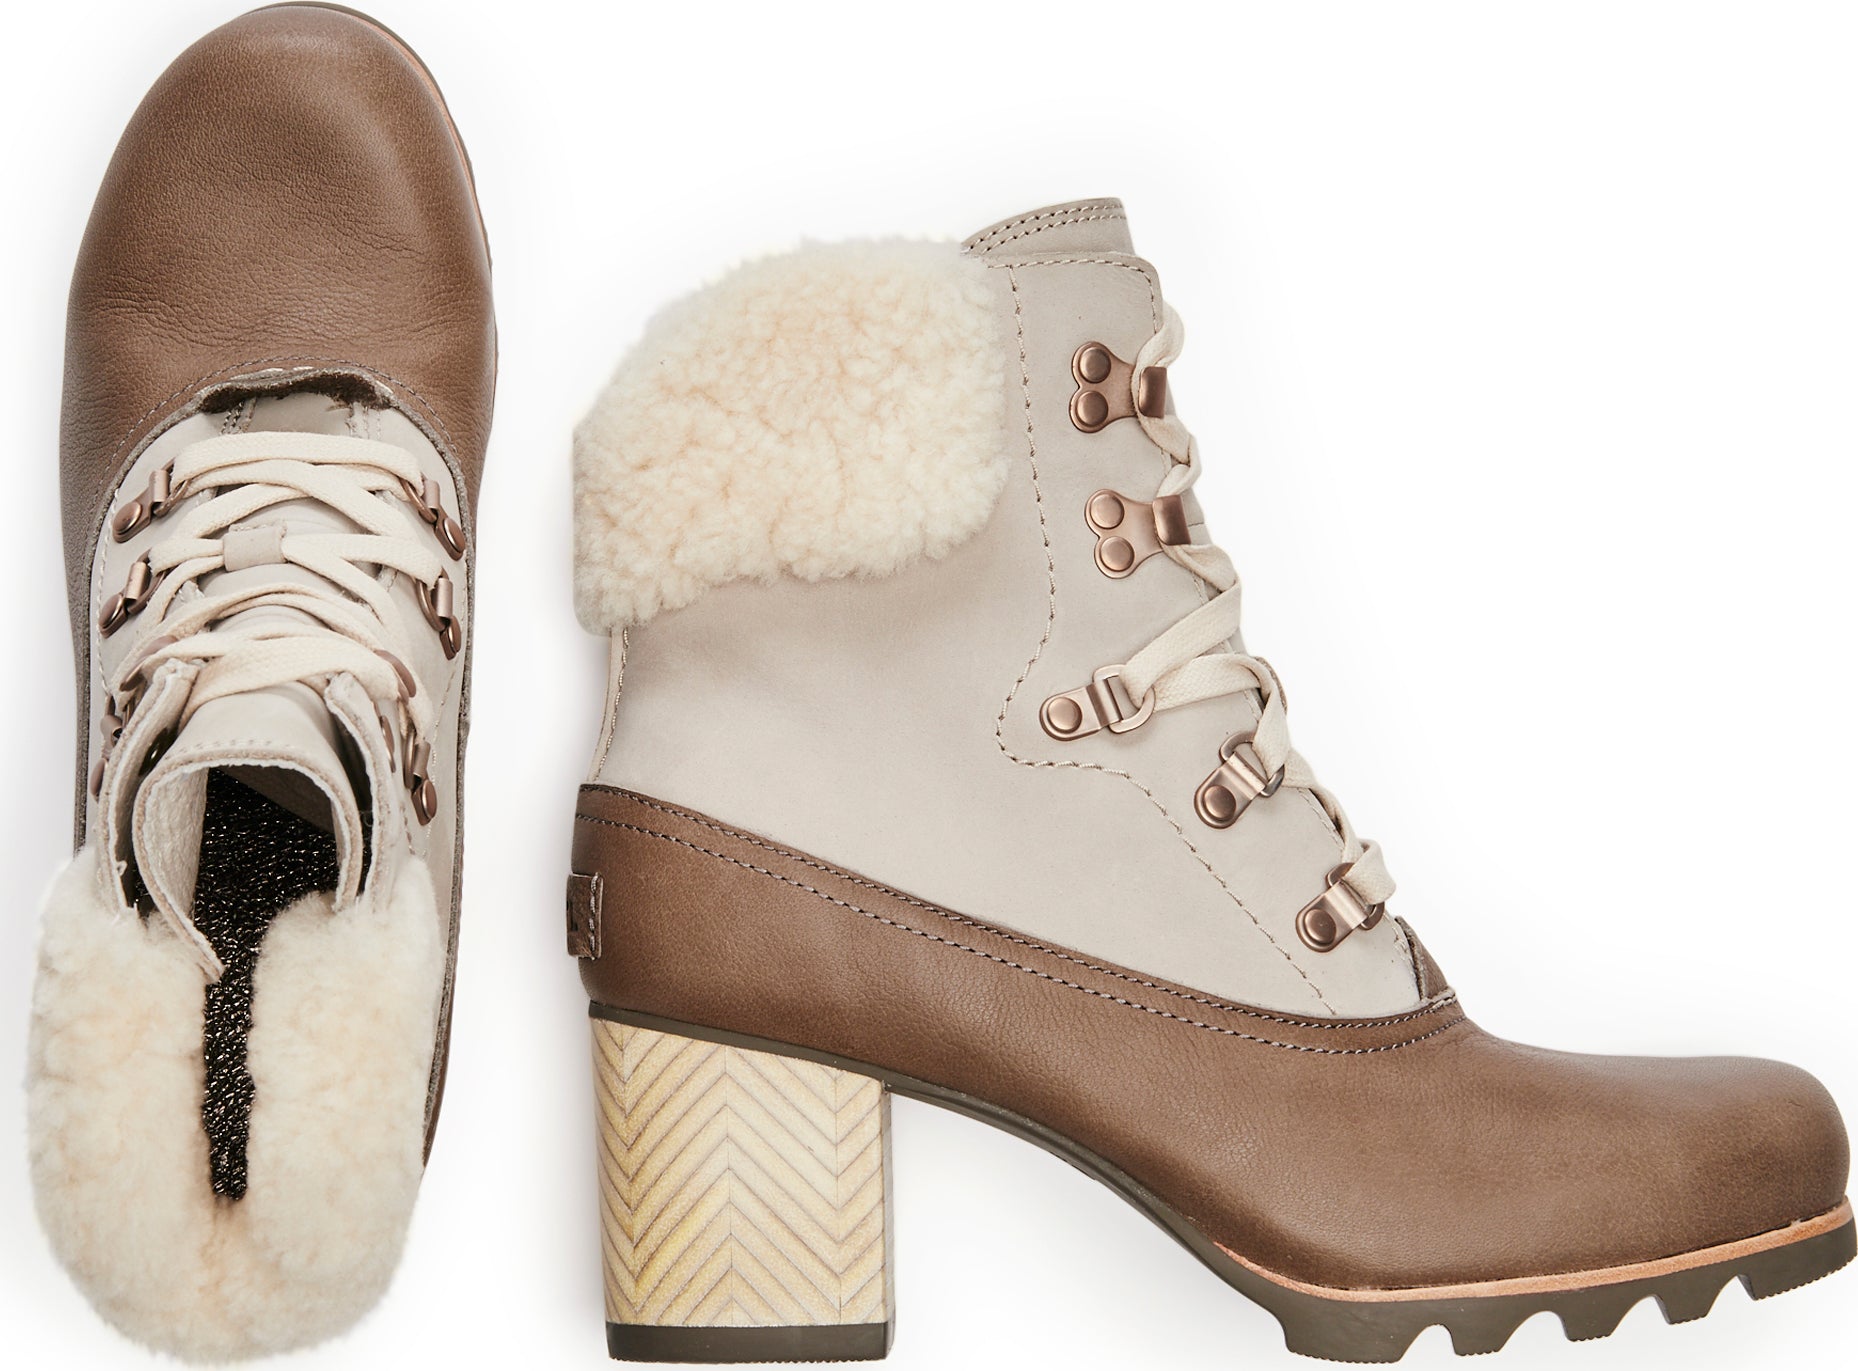 Sorel Jayne Lux Boots - Women's | The 